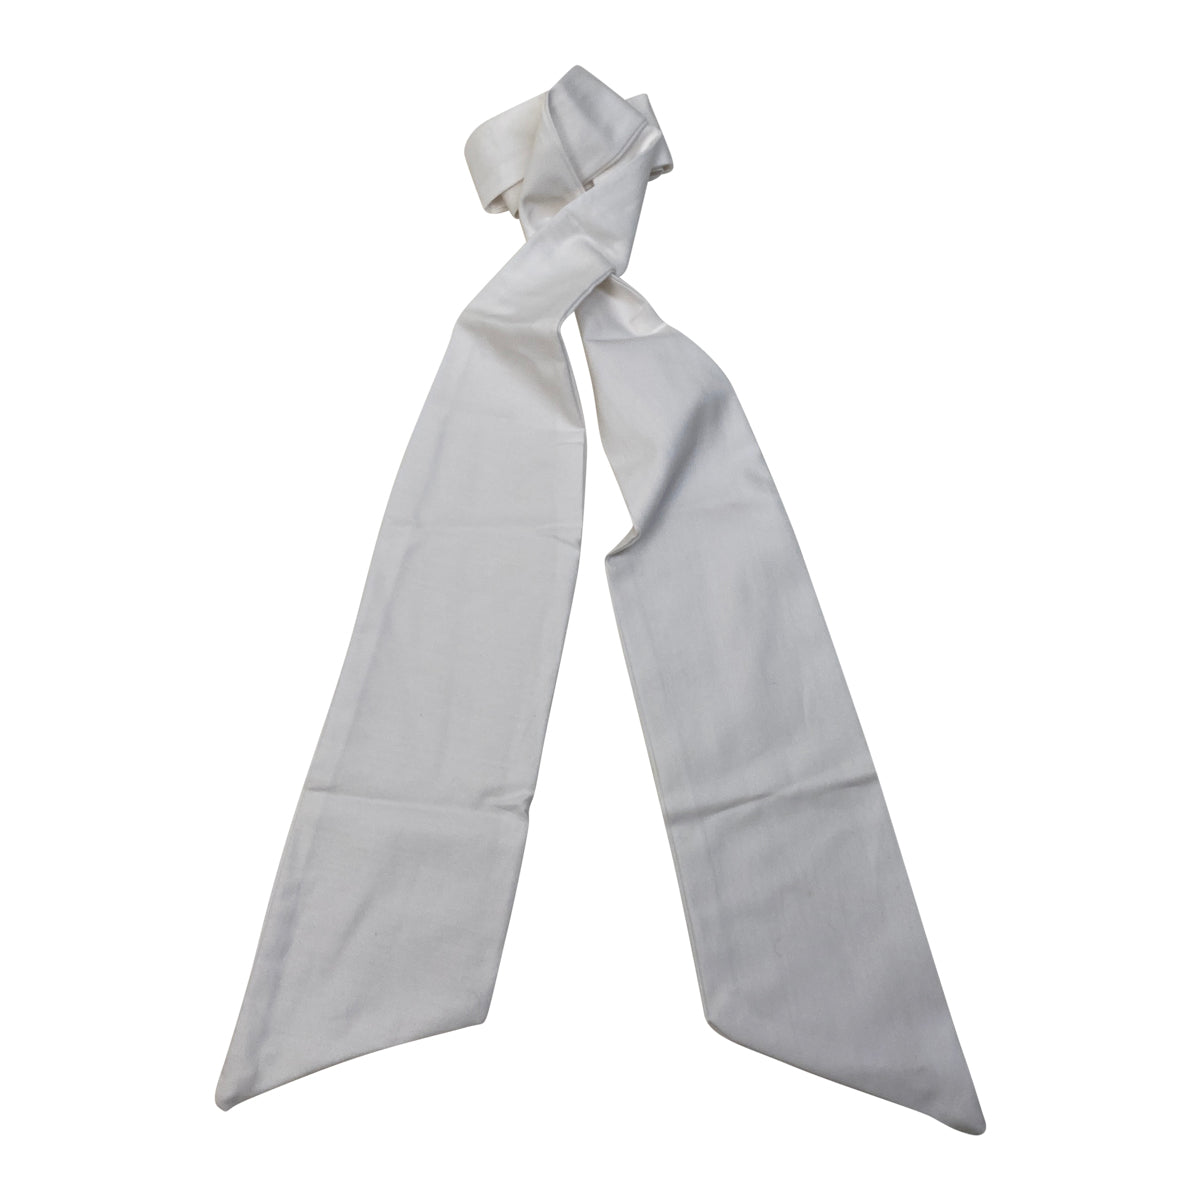 Nunn Finer 'Easiest Yet' Stock Tie in White